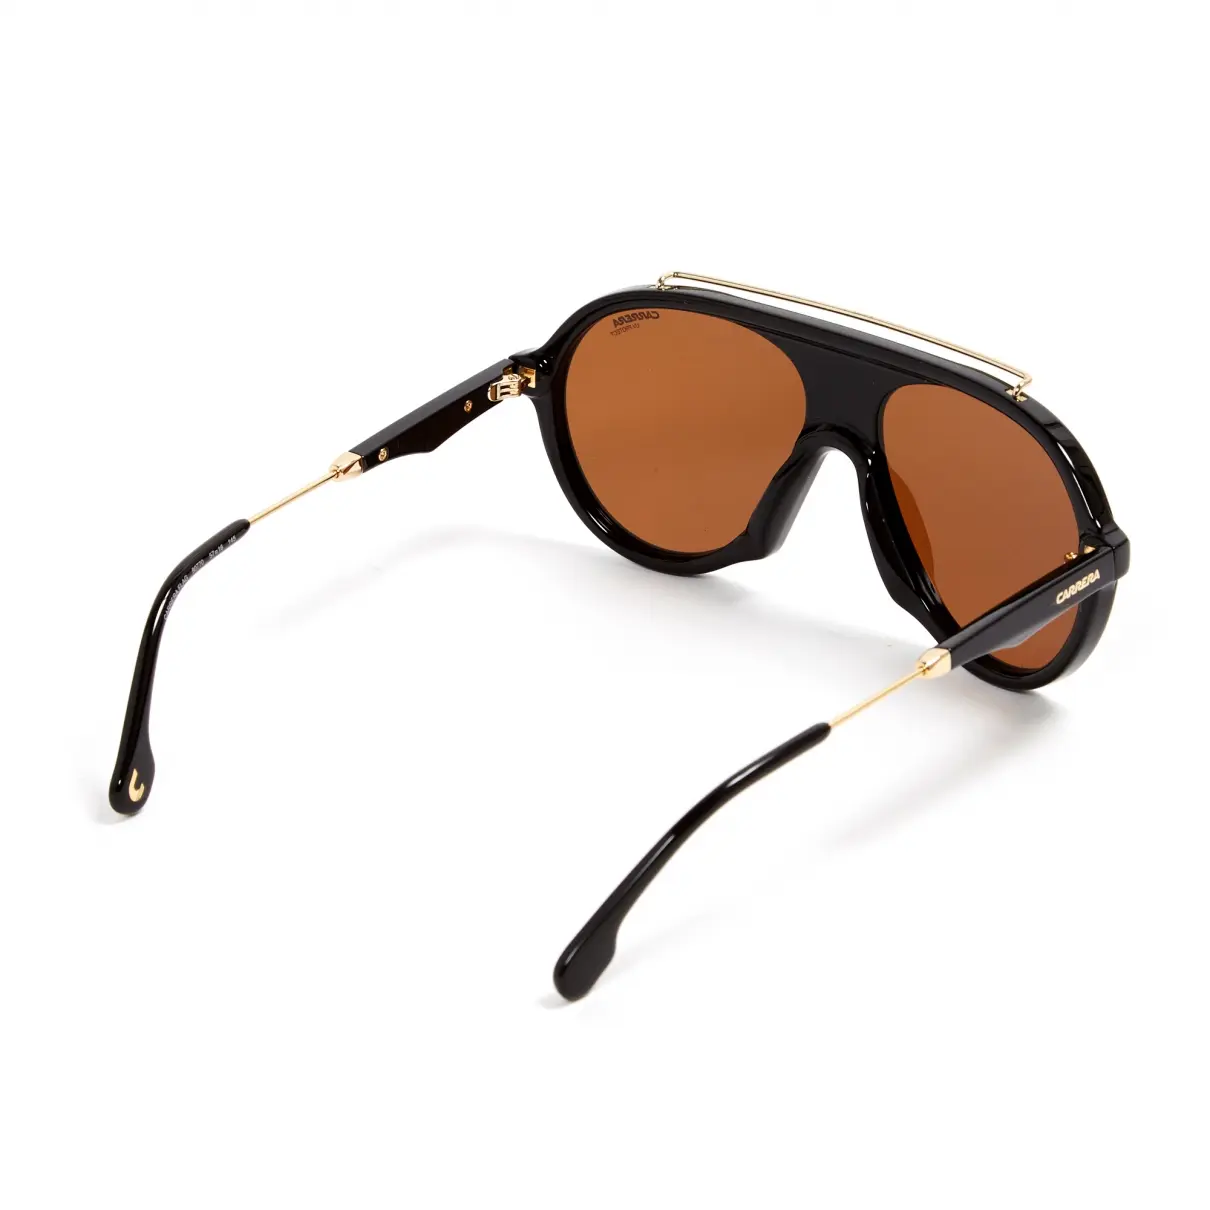 Buy Carrera Y Carrera Sunglasses online